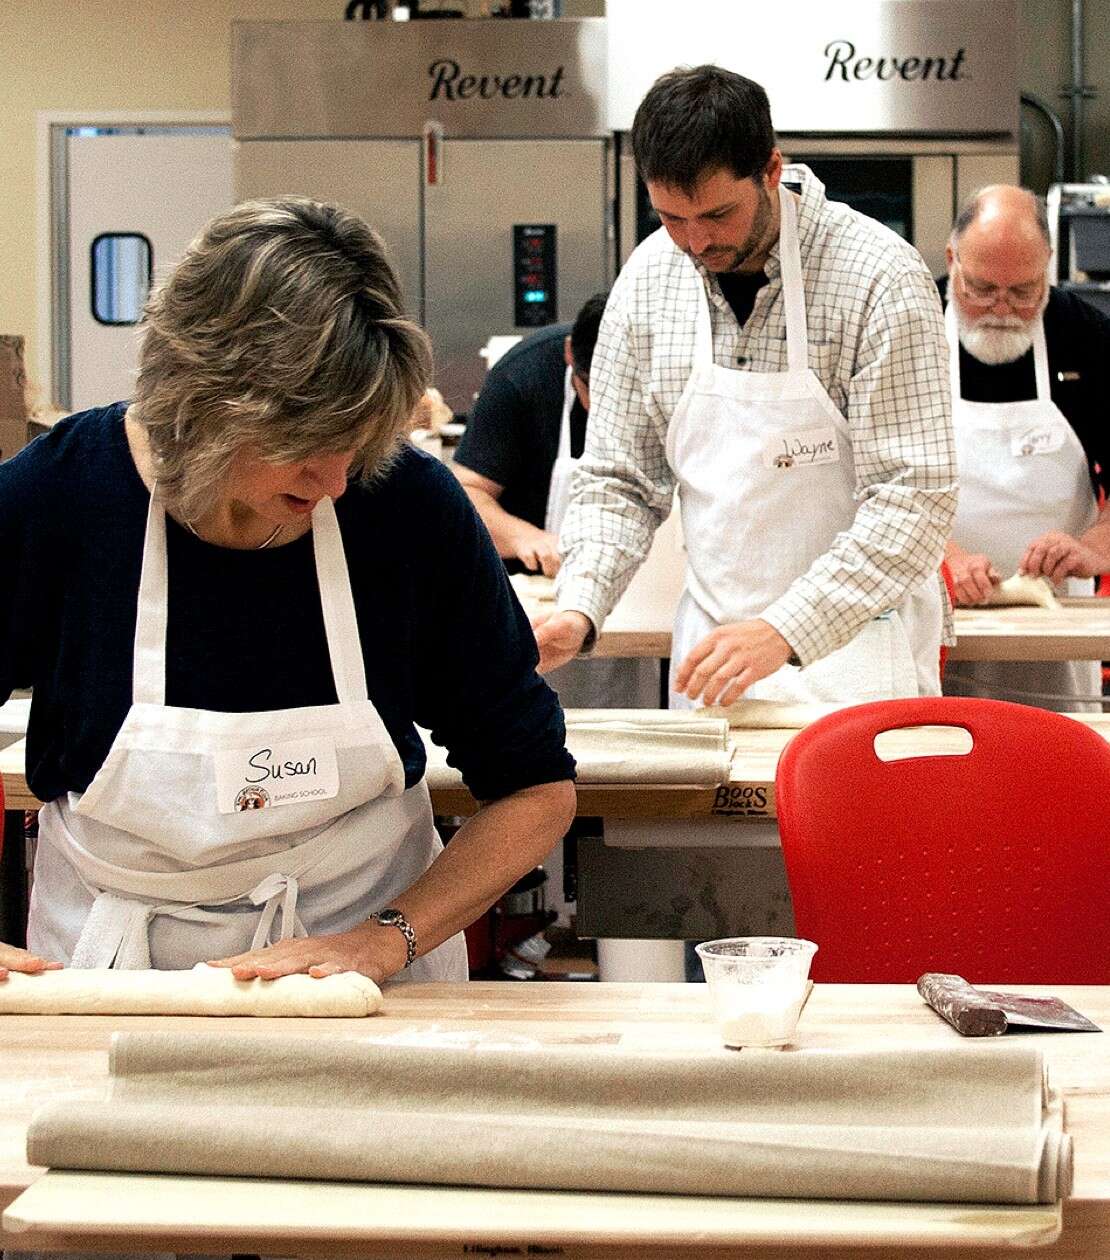 King Arthur Flour's Baking School at The Bread Lab logo